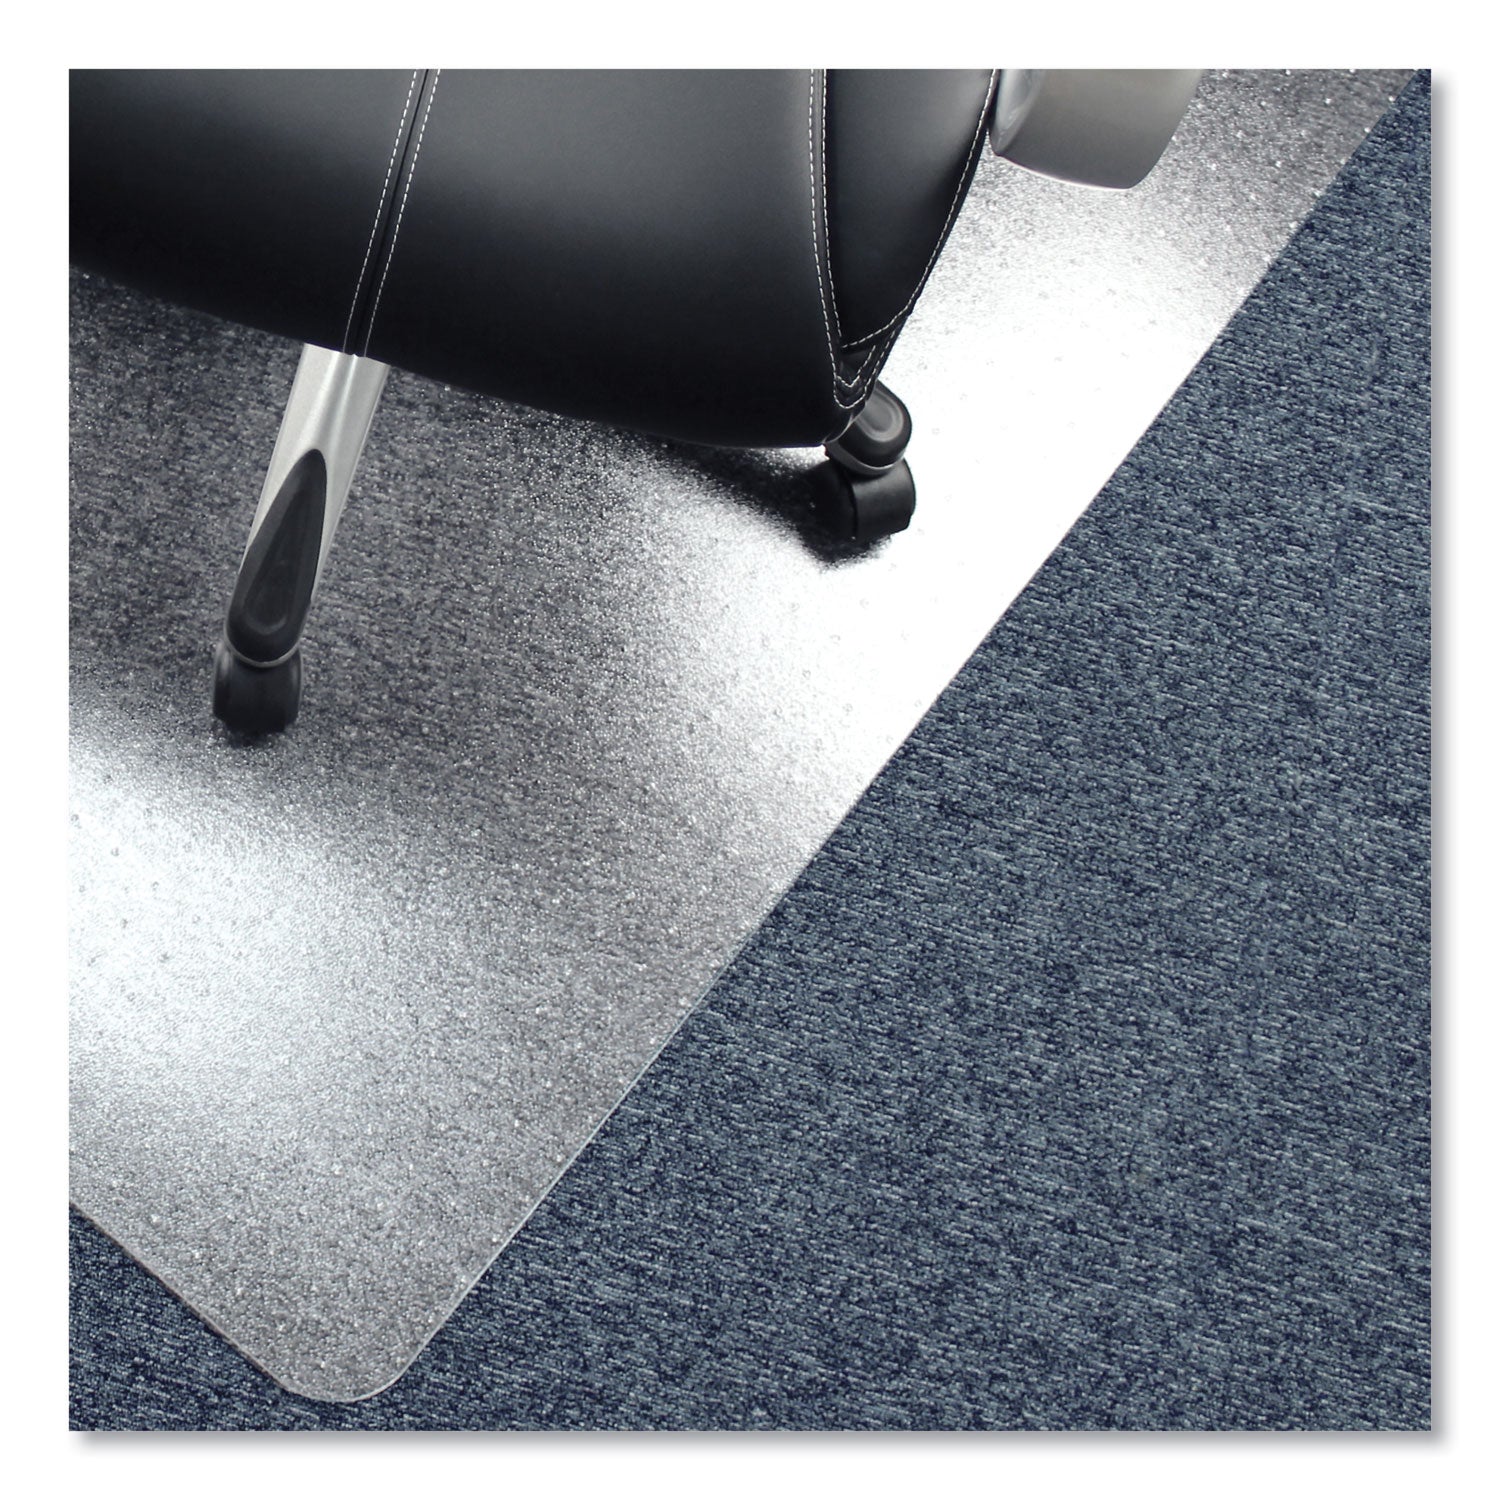 Cleartex Advantagemat Phthalate Free PVC Chair Mat for Low Pile Carpet, 48 x 36, Clear - 